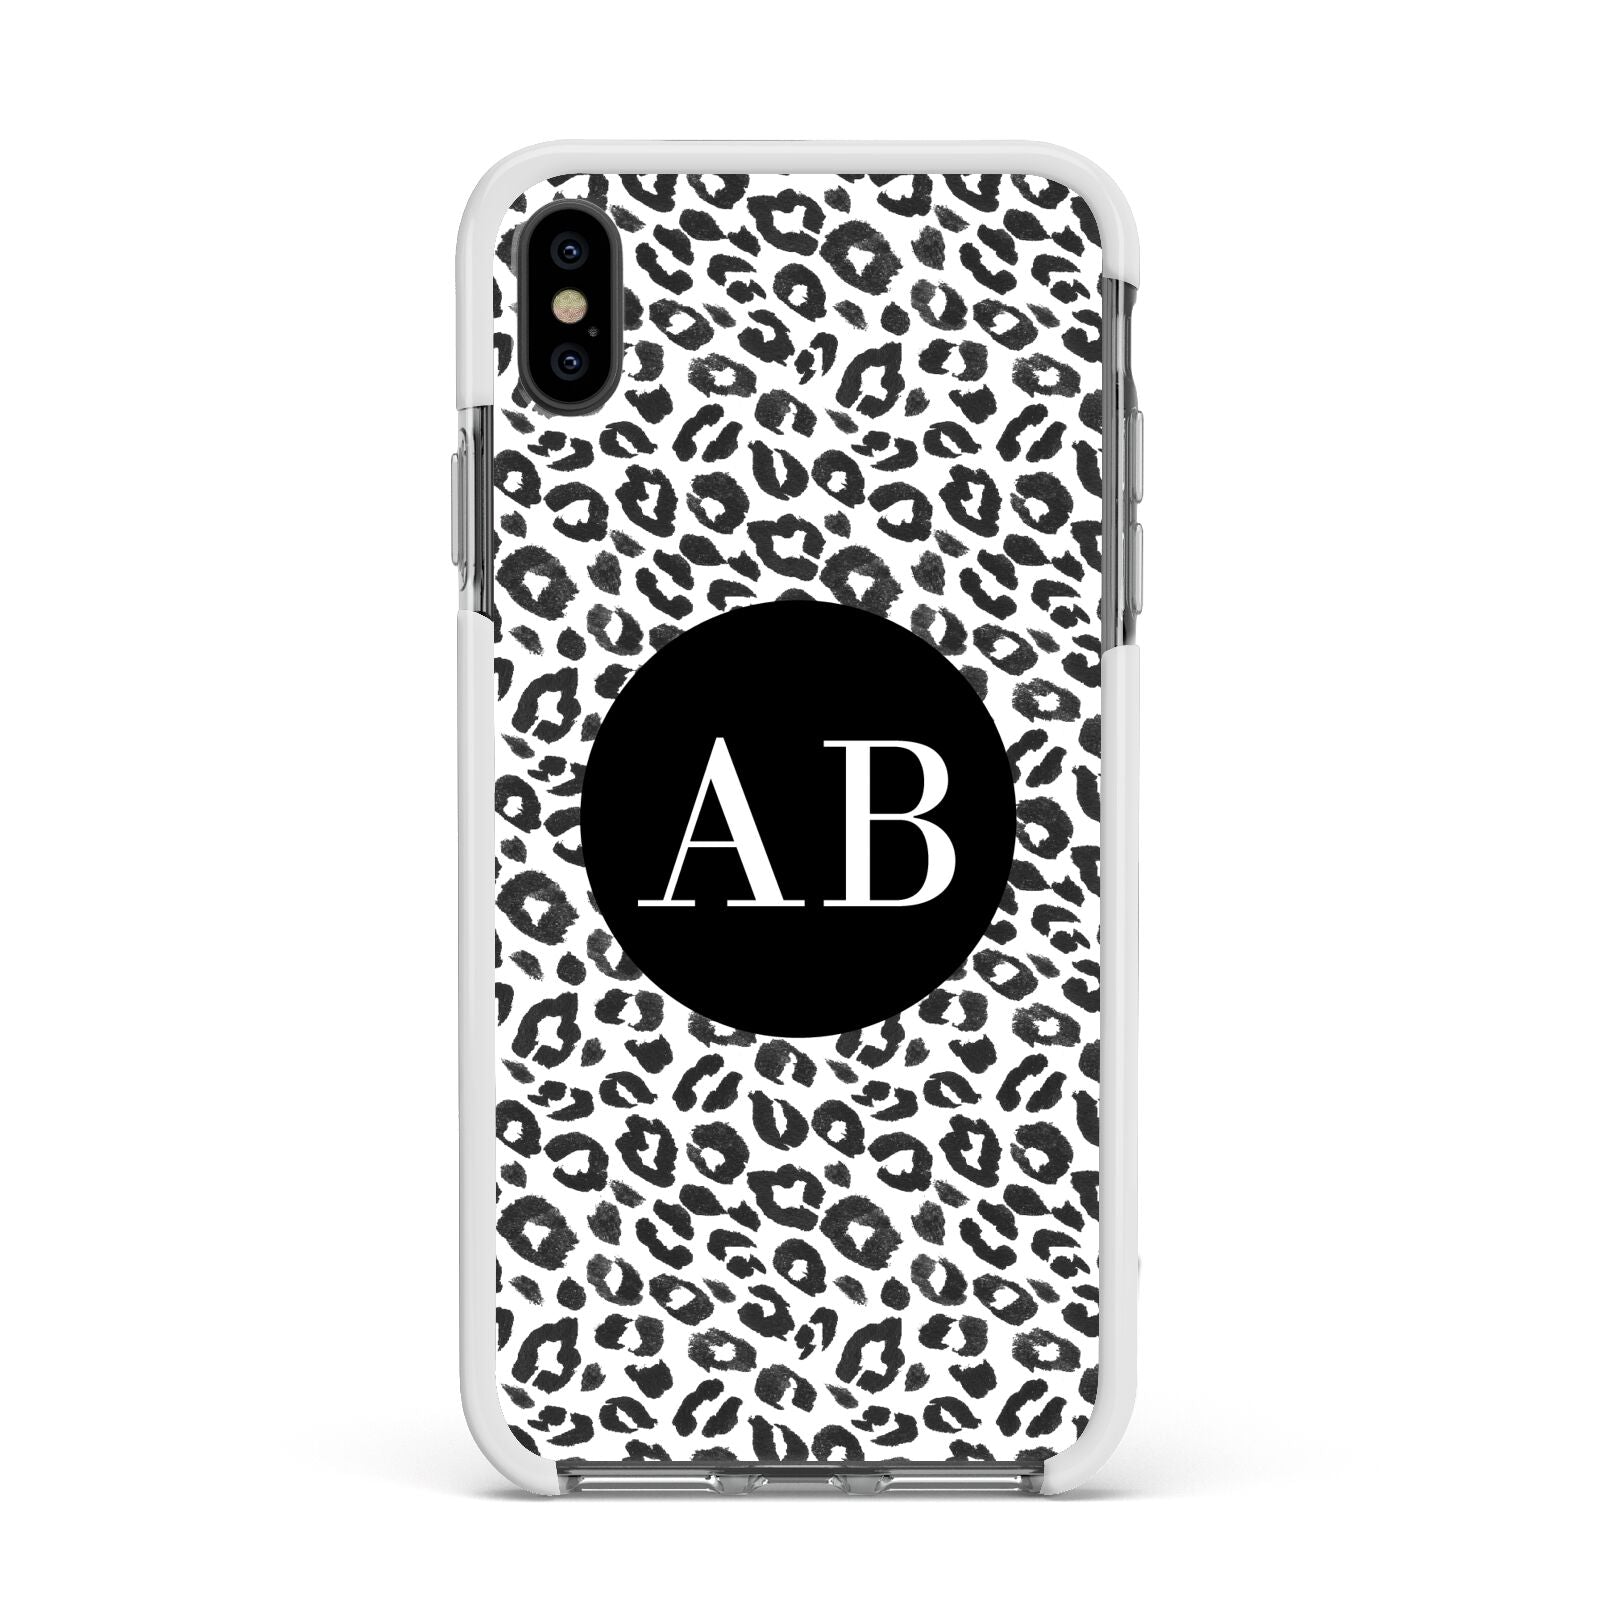 Leopard Print Black and White Apple iPhone Xs Max Impact Case White Edge on Black Phone